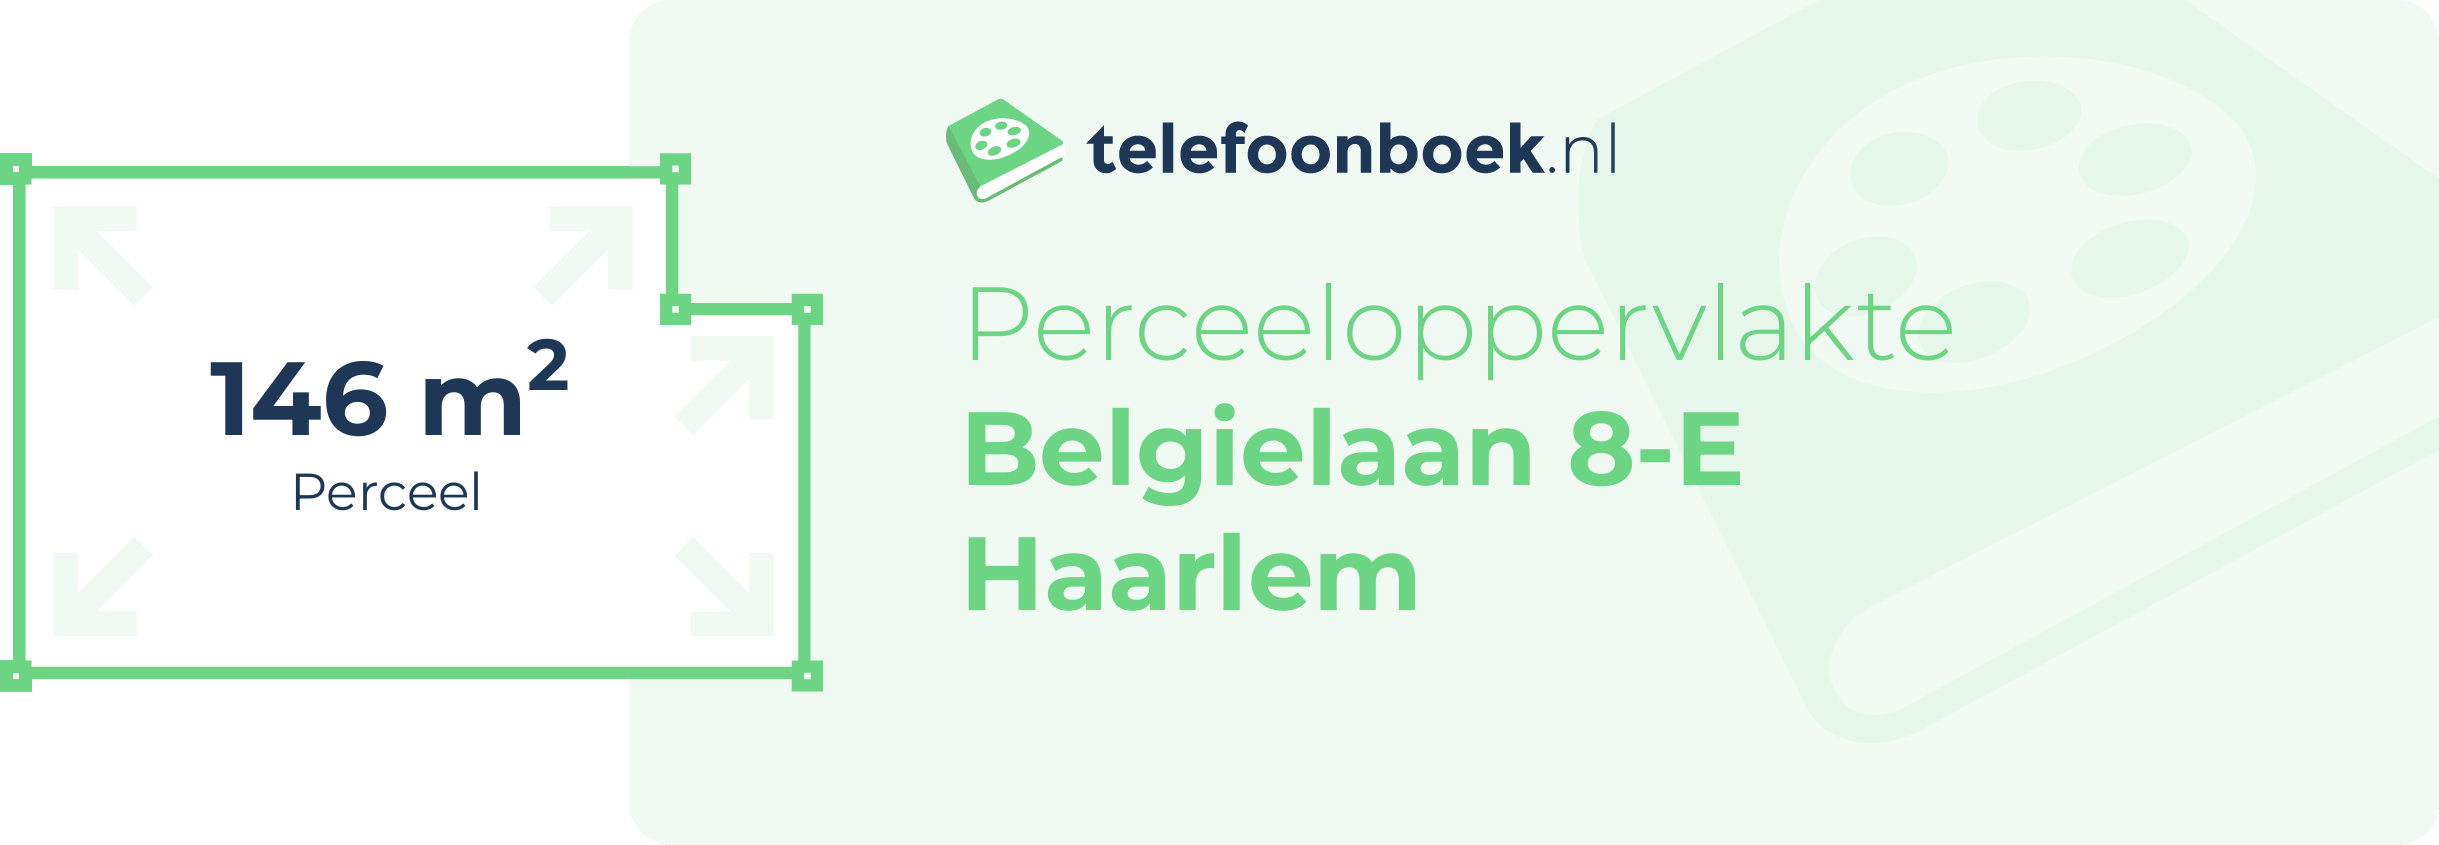 Perceeloppervlakte Belgielaan 8-E Haarlem